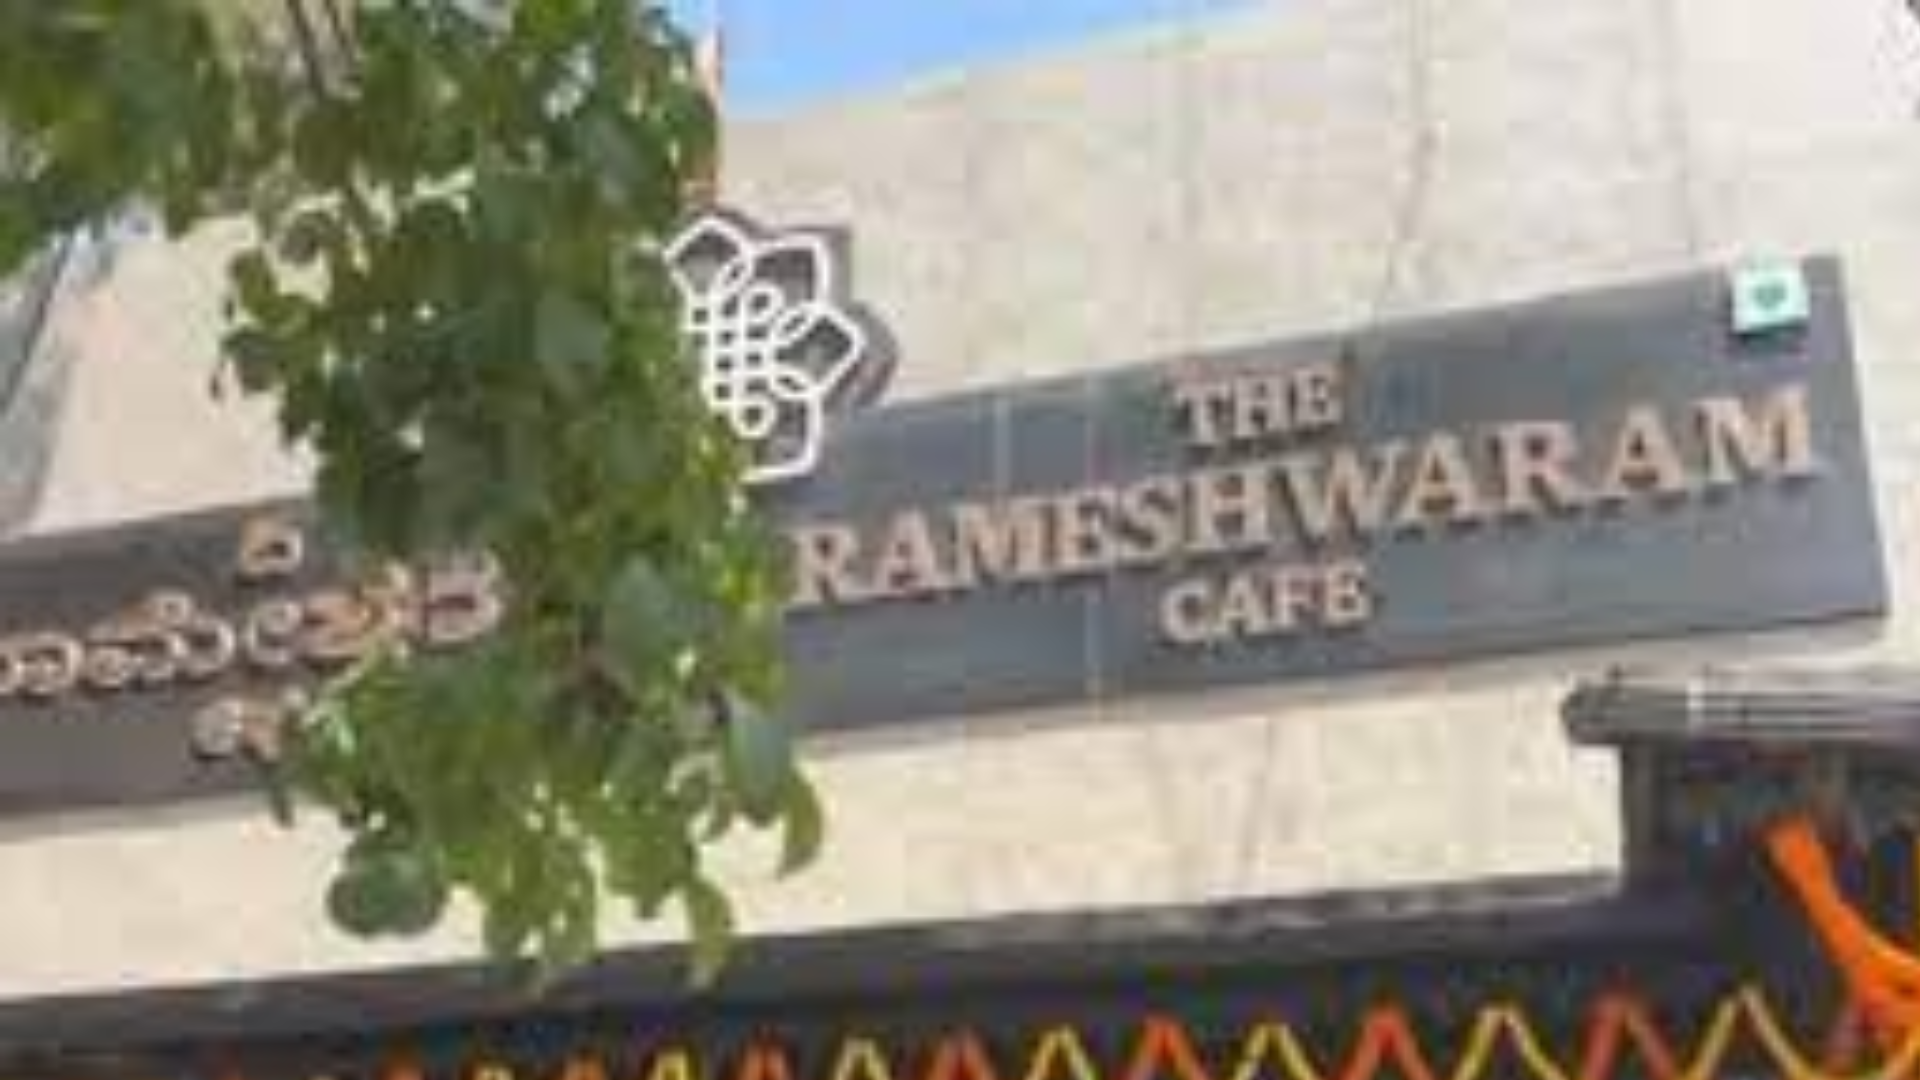 Rameshwaram Cafe blast’s suspect identified on CCTV, Man ordered idli and left